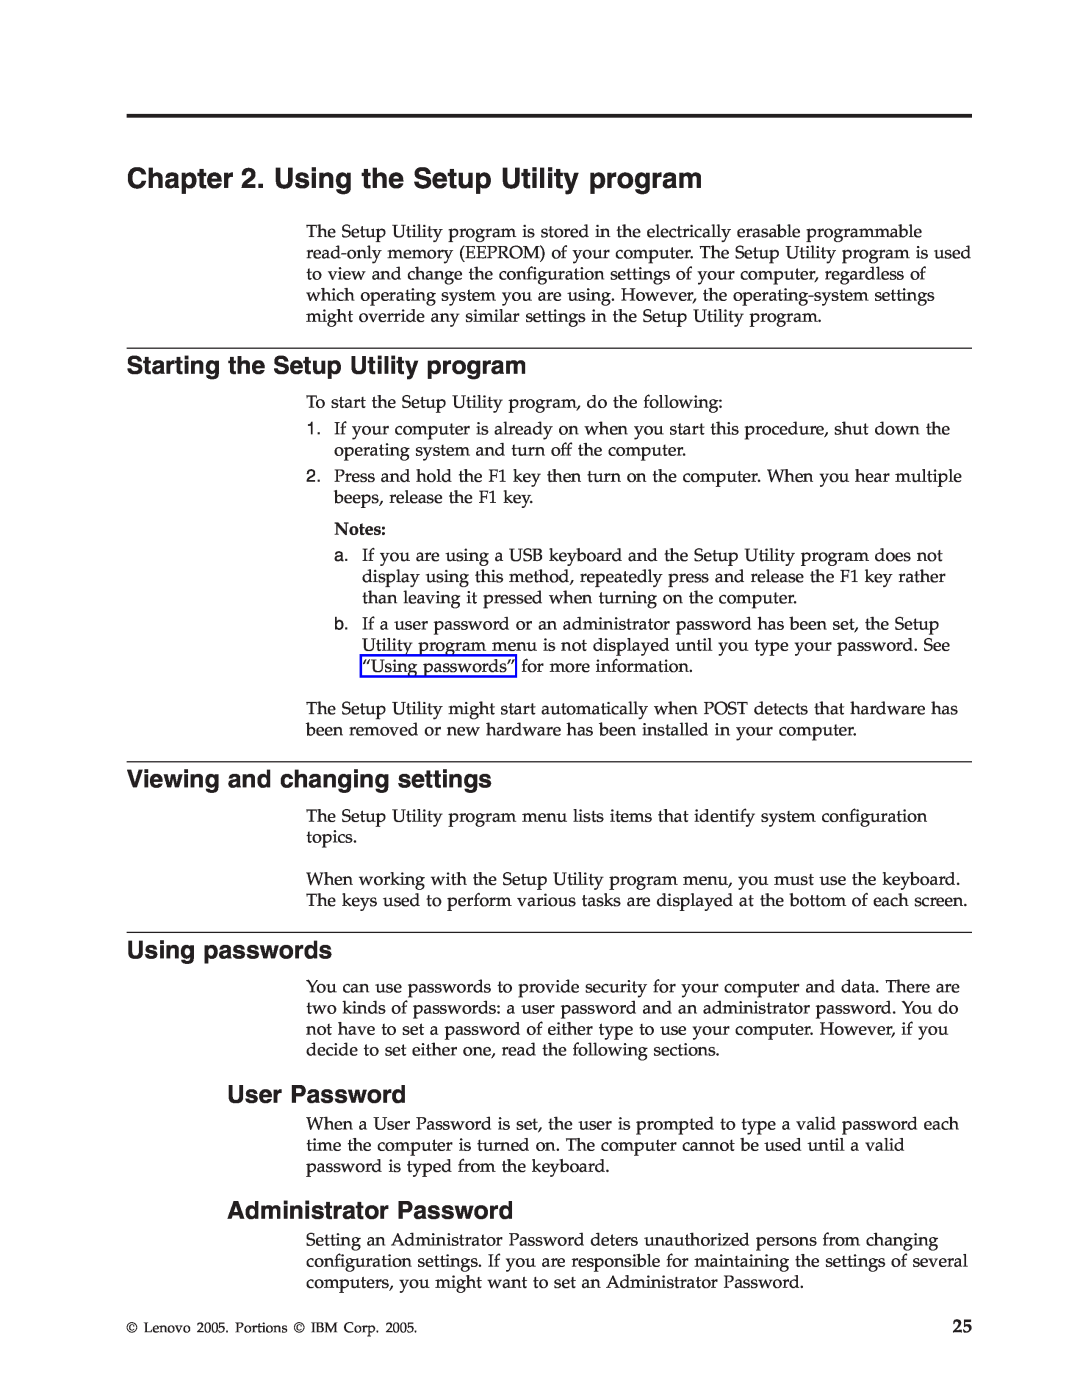 Lenovo 9213, 9212 manual Using the Setup Utility program, Starting the Setup Utility program, Viewing and changing settings 